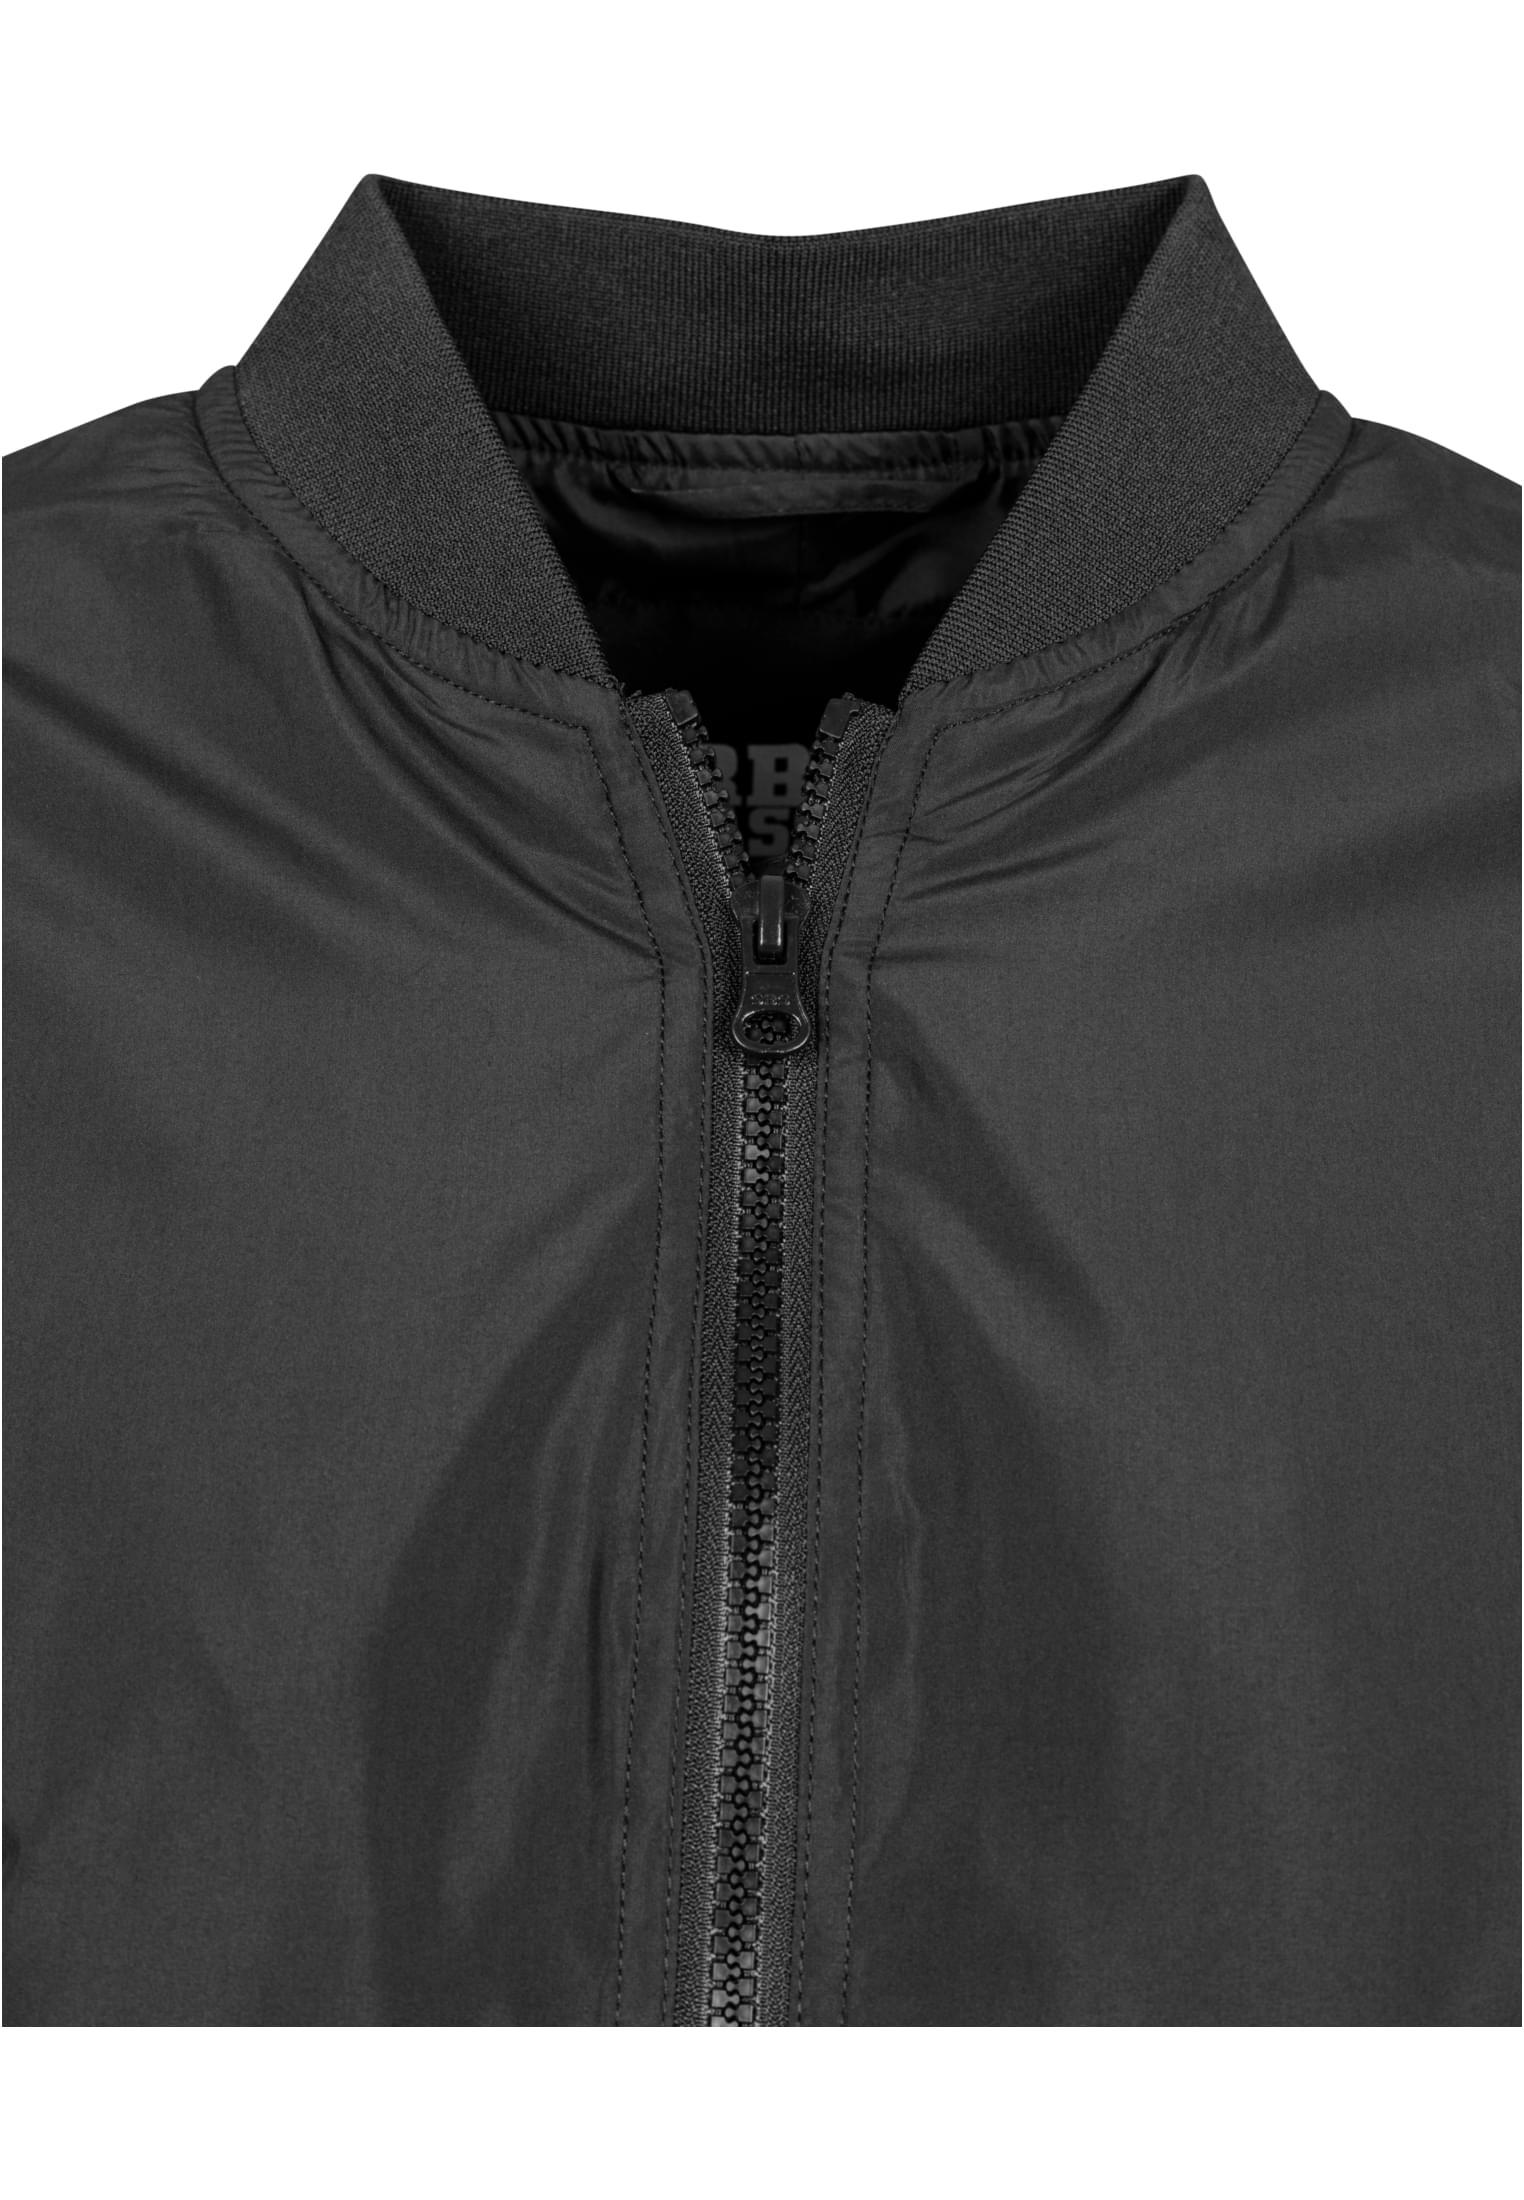 Frauen Ladies Light Bomber Jacket in Farbe black